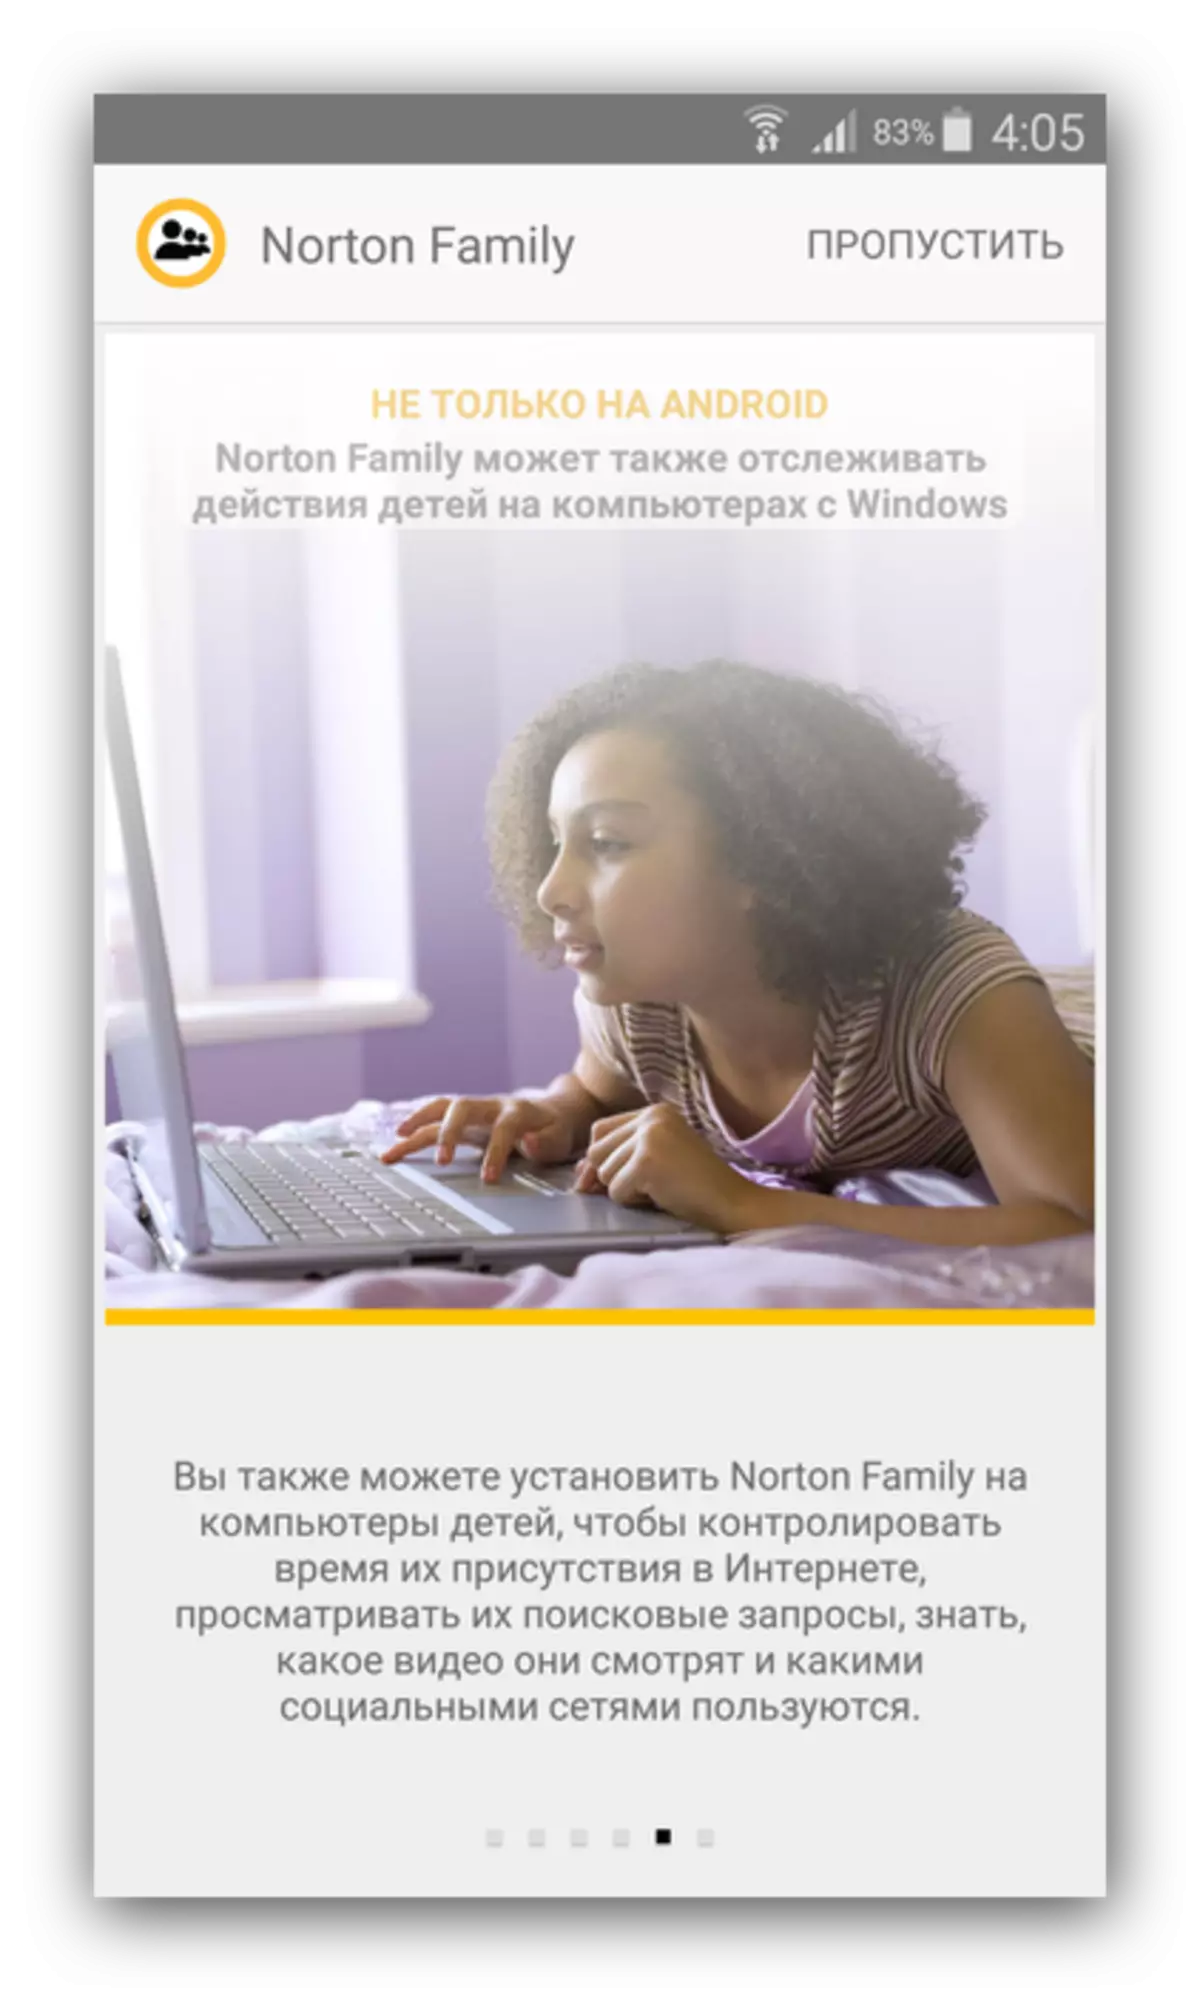 Norton Family Parent Control Application